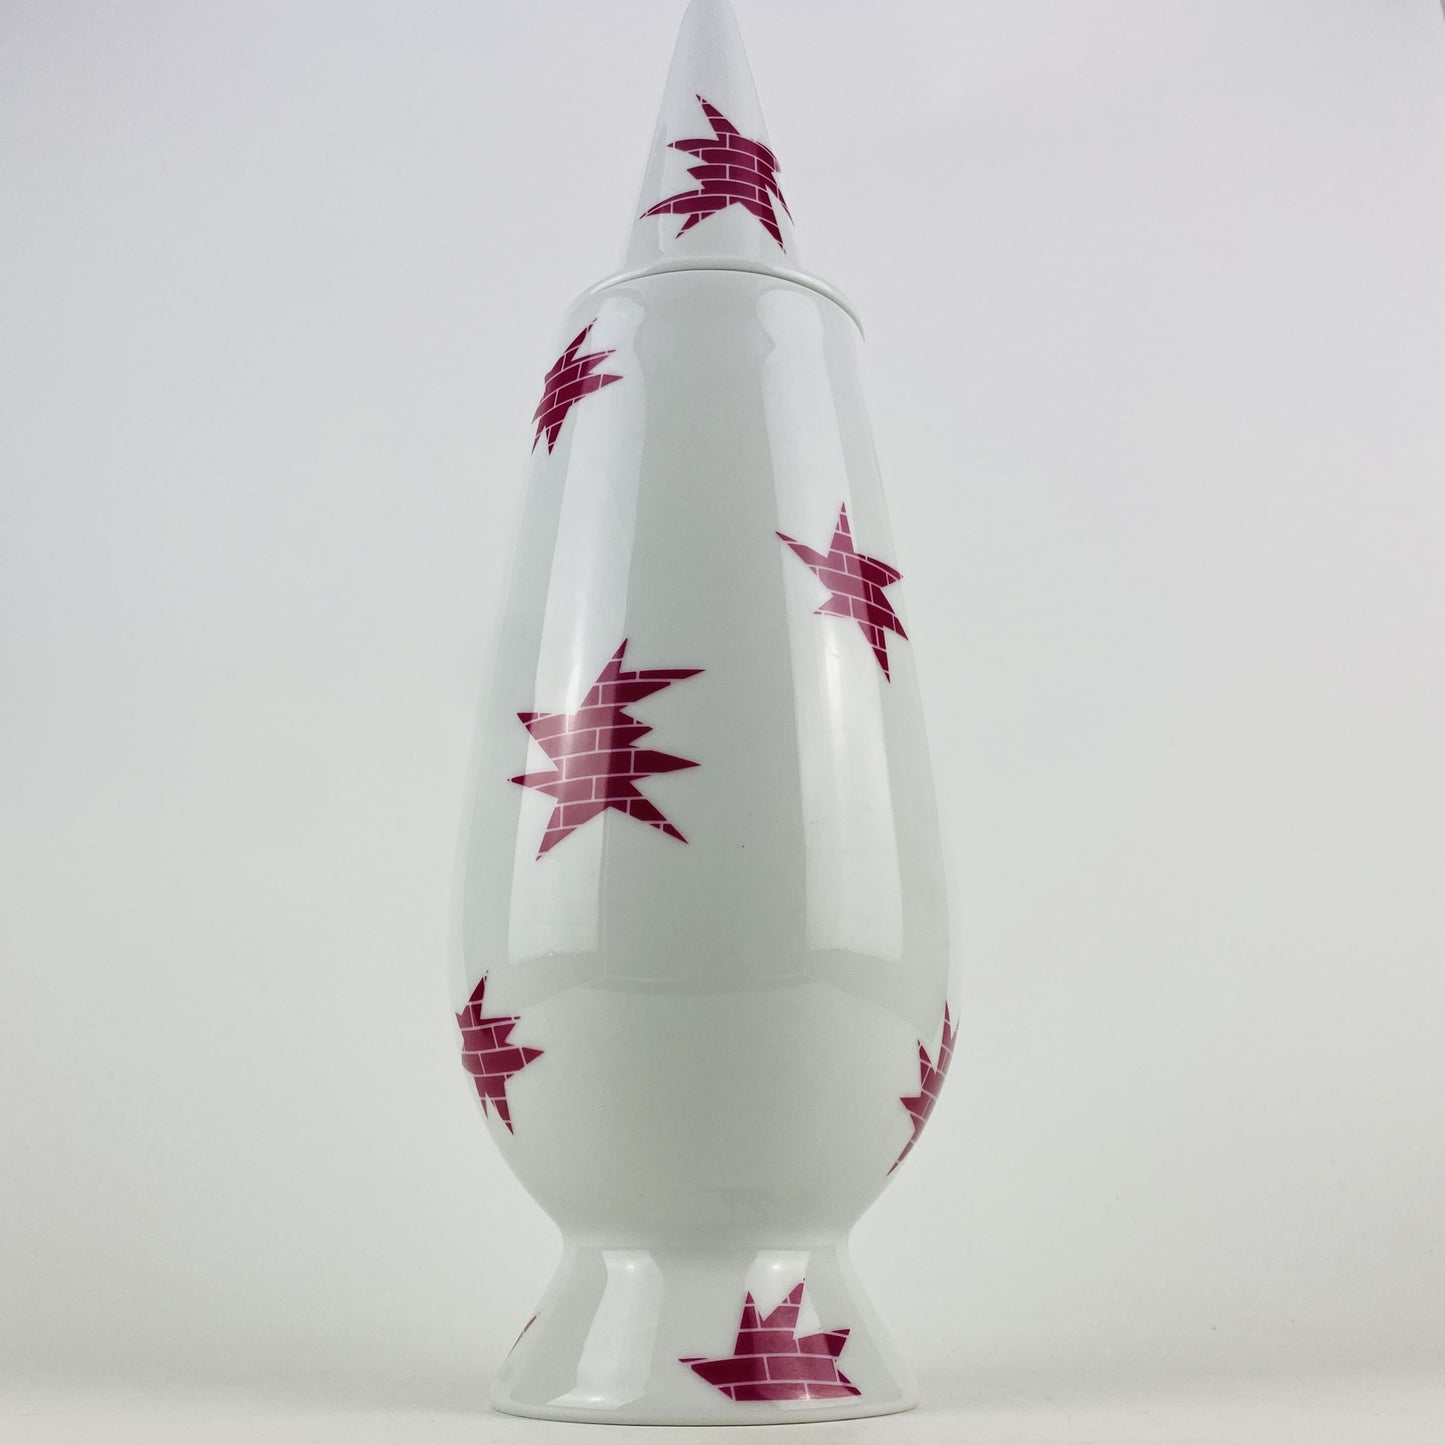 Alessi Tendentse Vase by Lapo Binazzi for Alessandro Mendini 100% Make-up series - No. 8